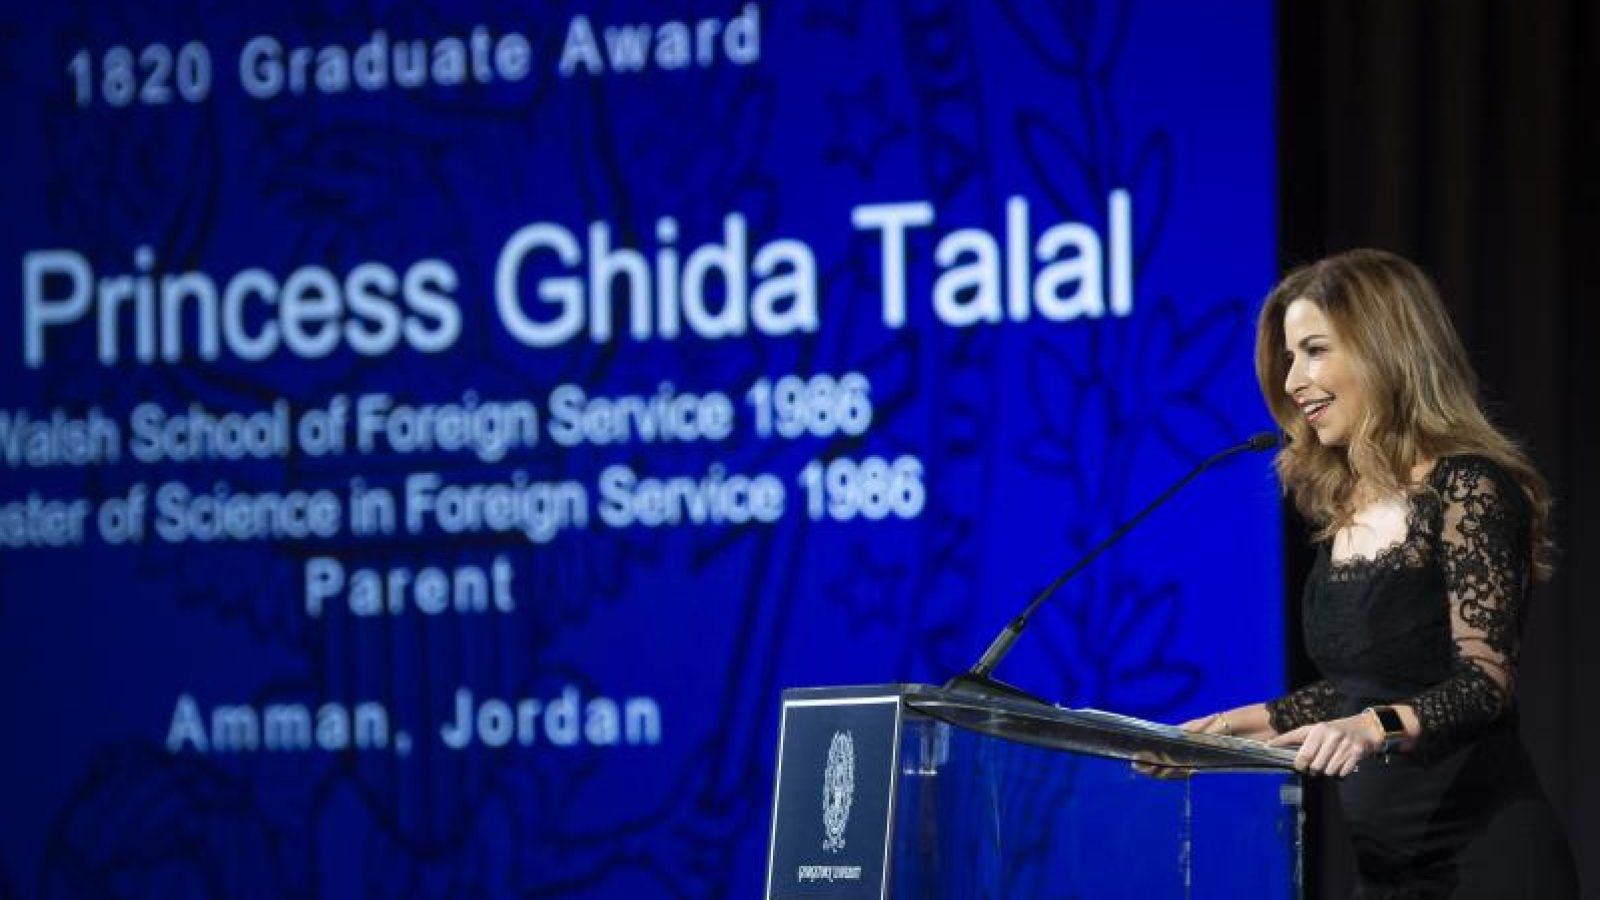 Princess Ghida Talal